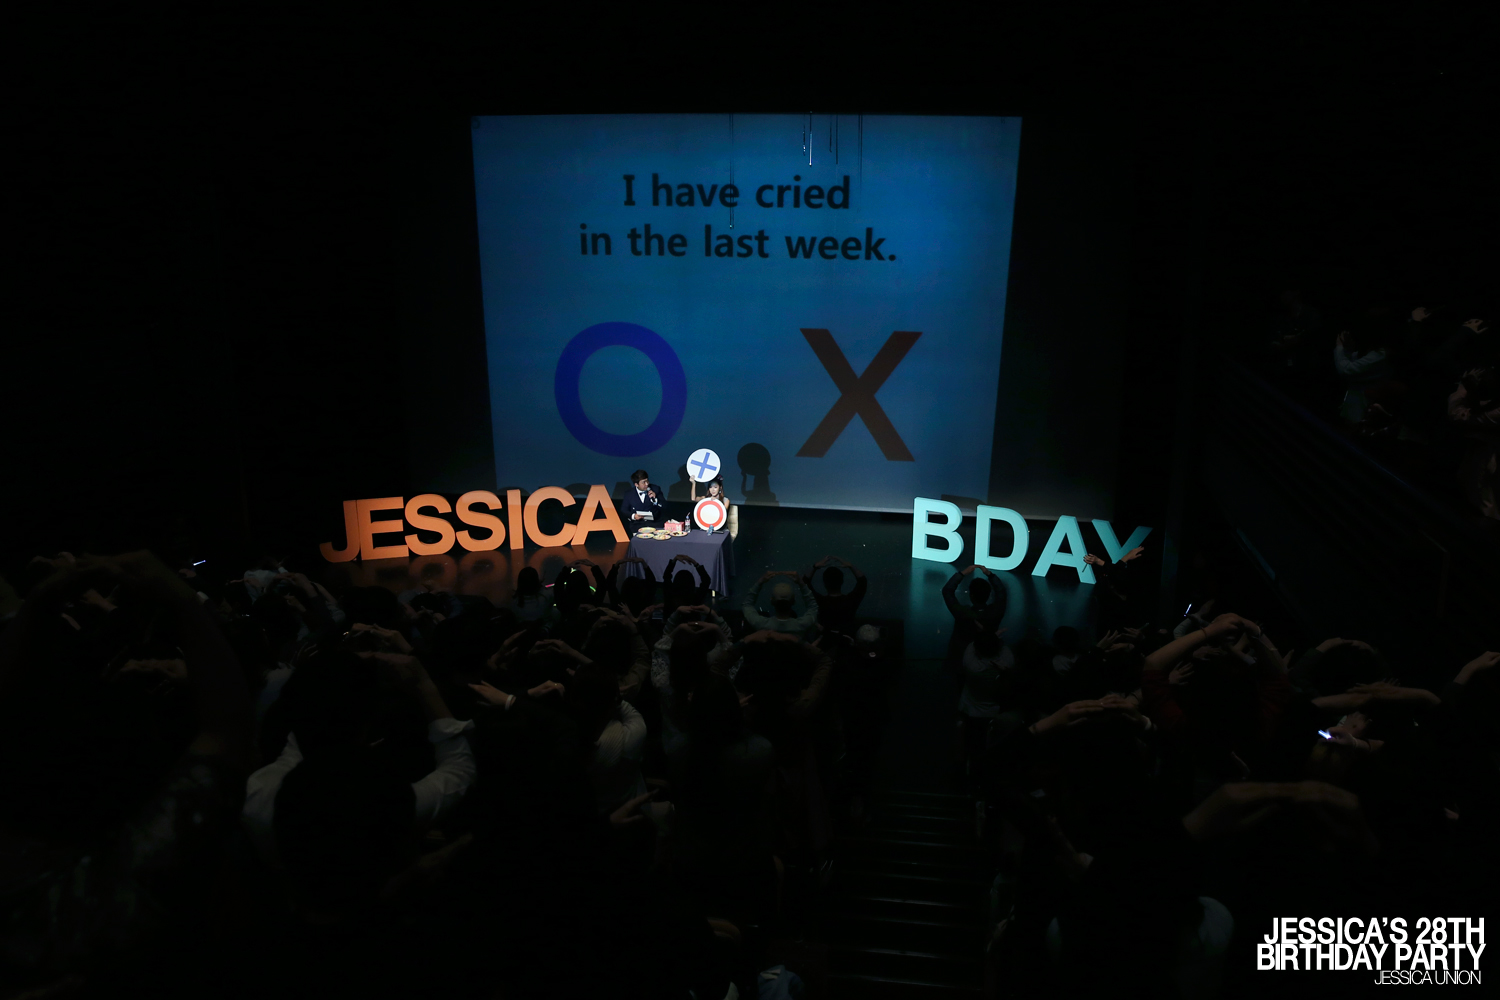 [PIC][17-04-2016]Jessica tham dự "JESSICA'S 28TH BIRTHDAY PARTY" vào tối nay 26318837790_8128dcbe2d_o